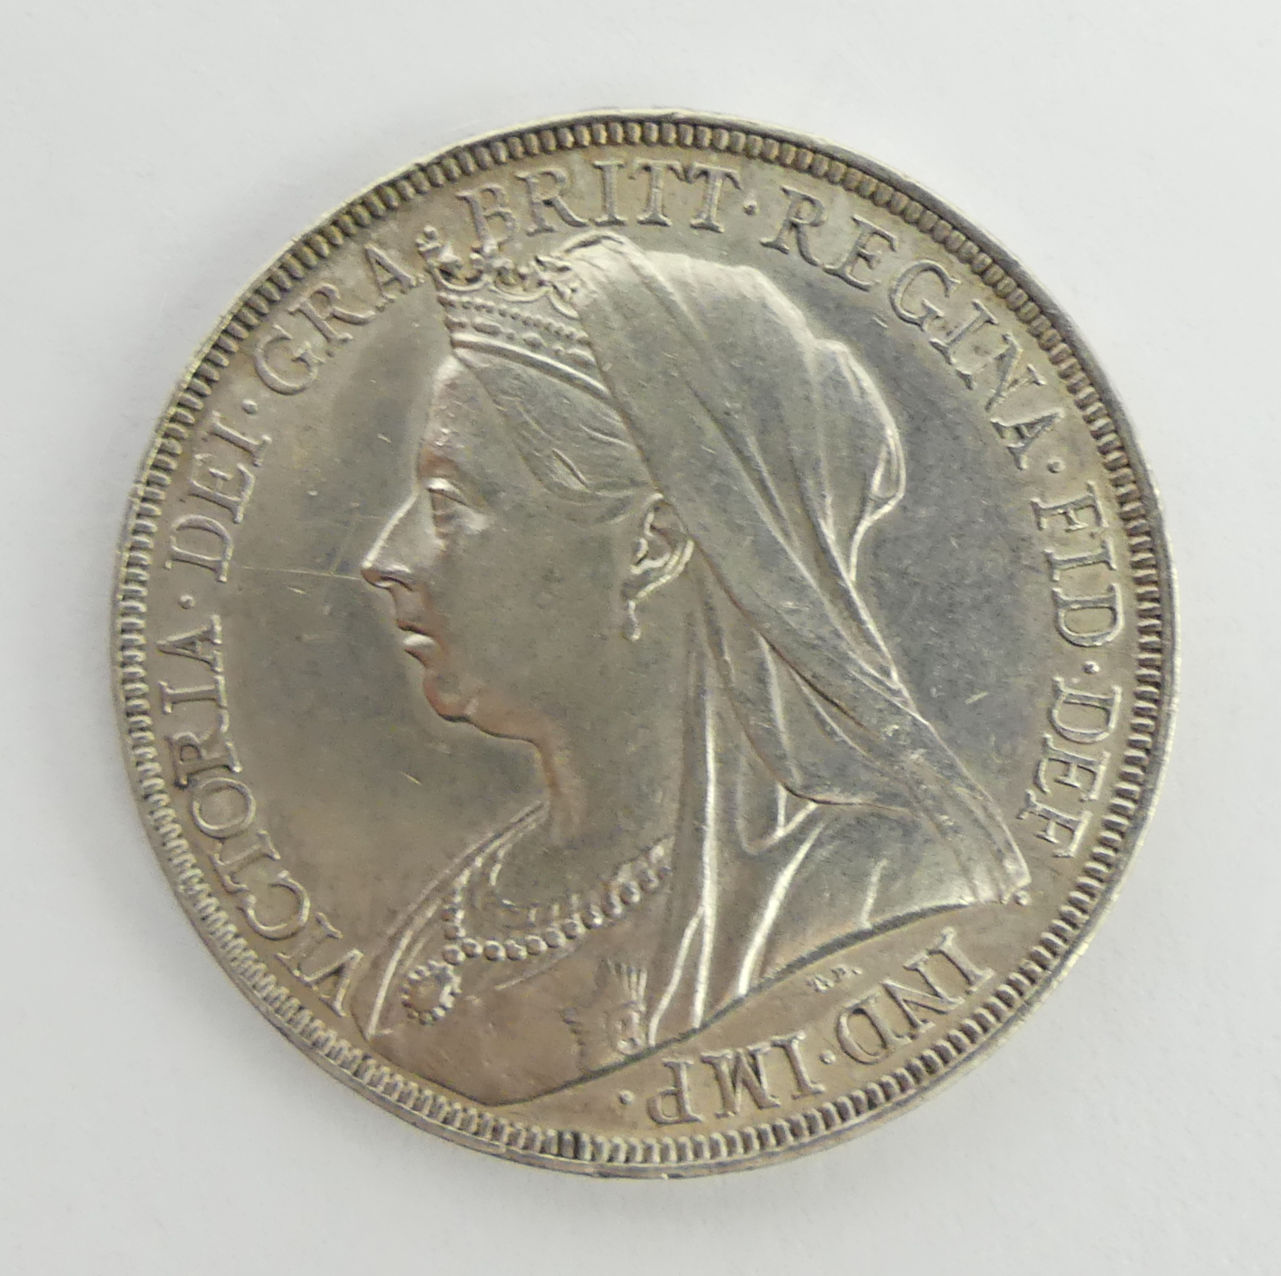 Queen Victoria 1895 silver crown. - Image 2 of 2